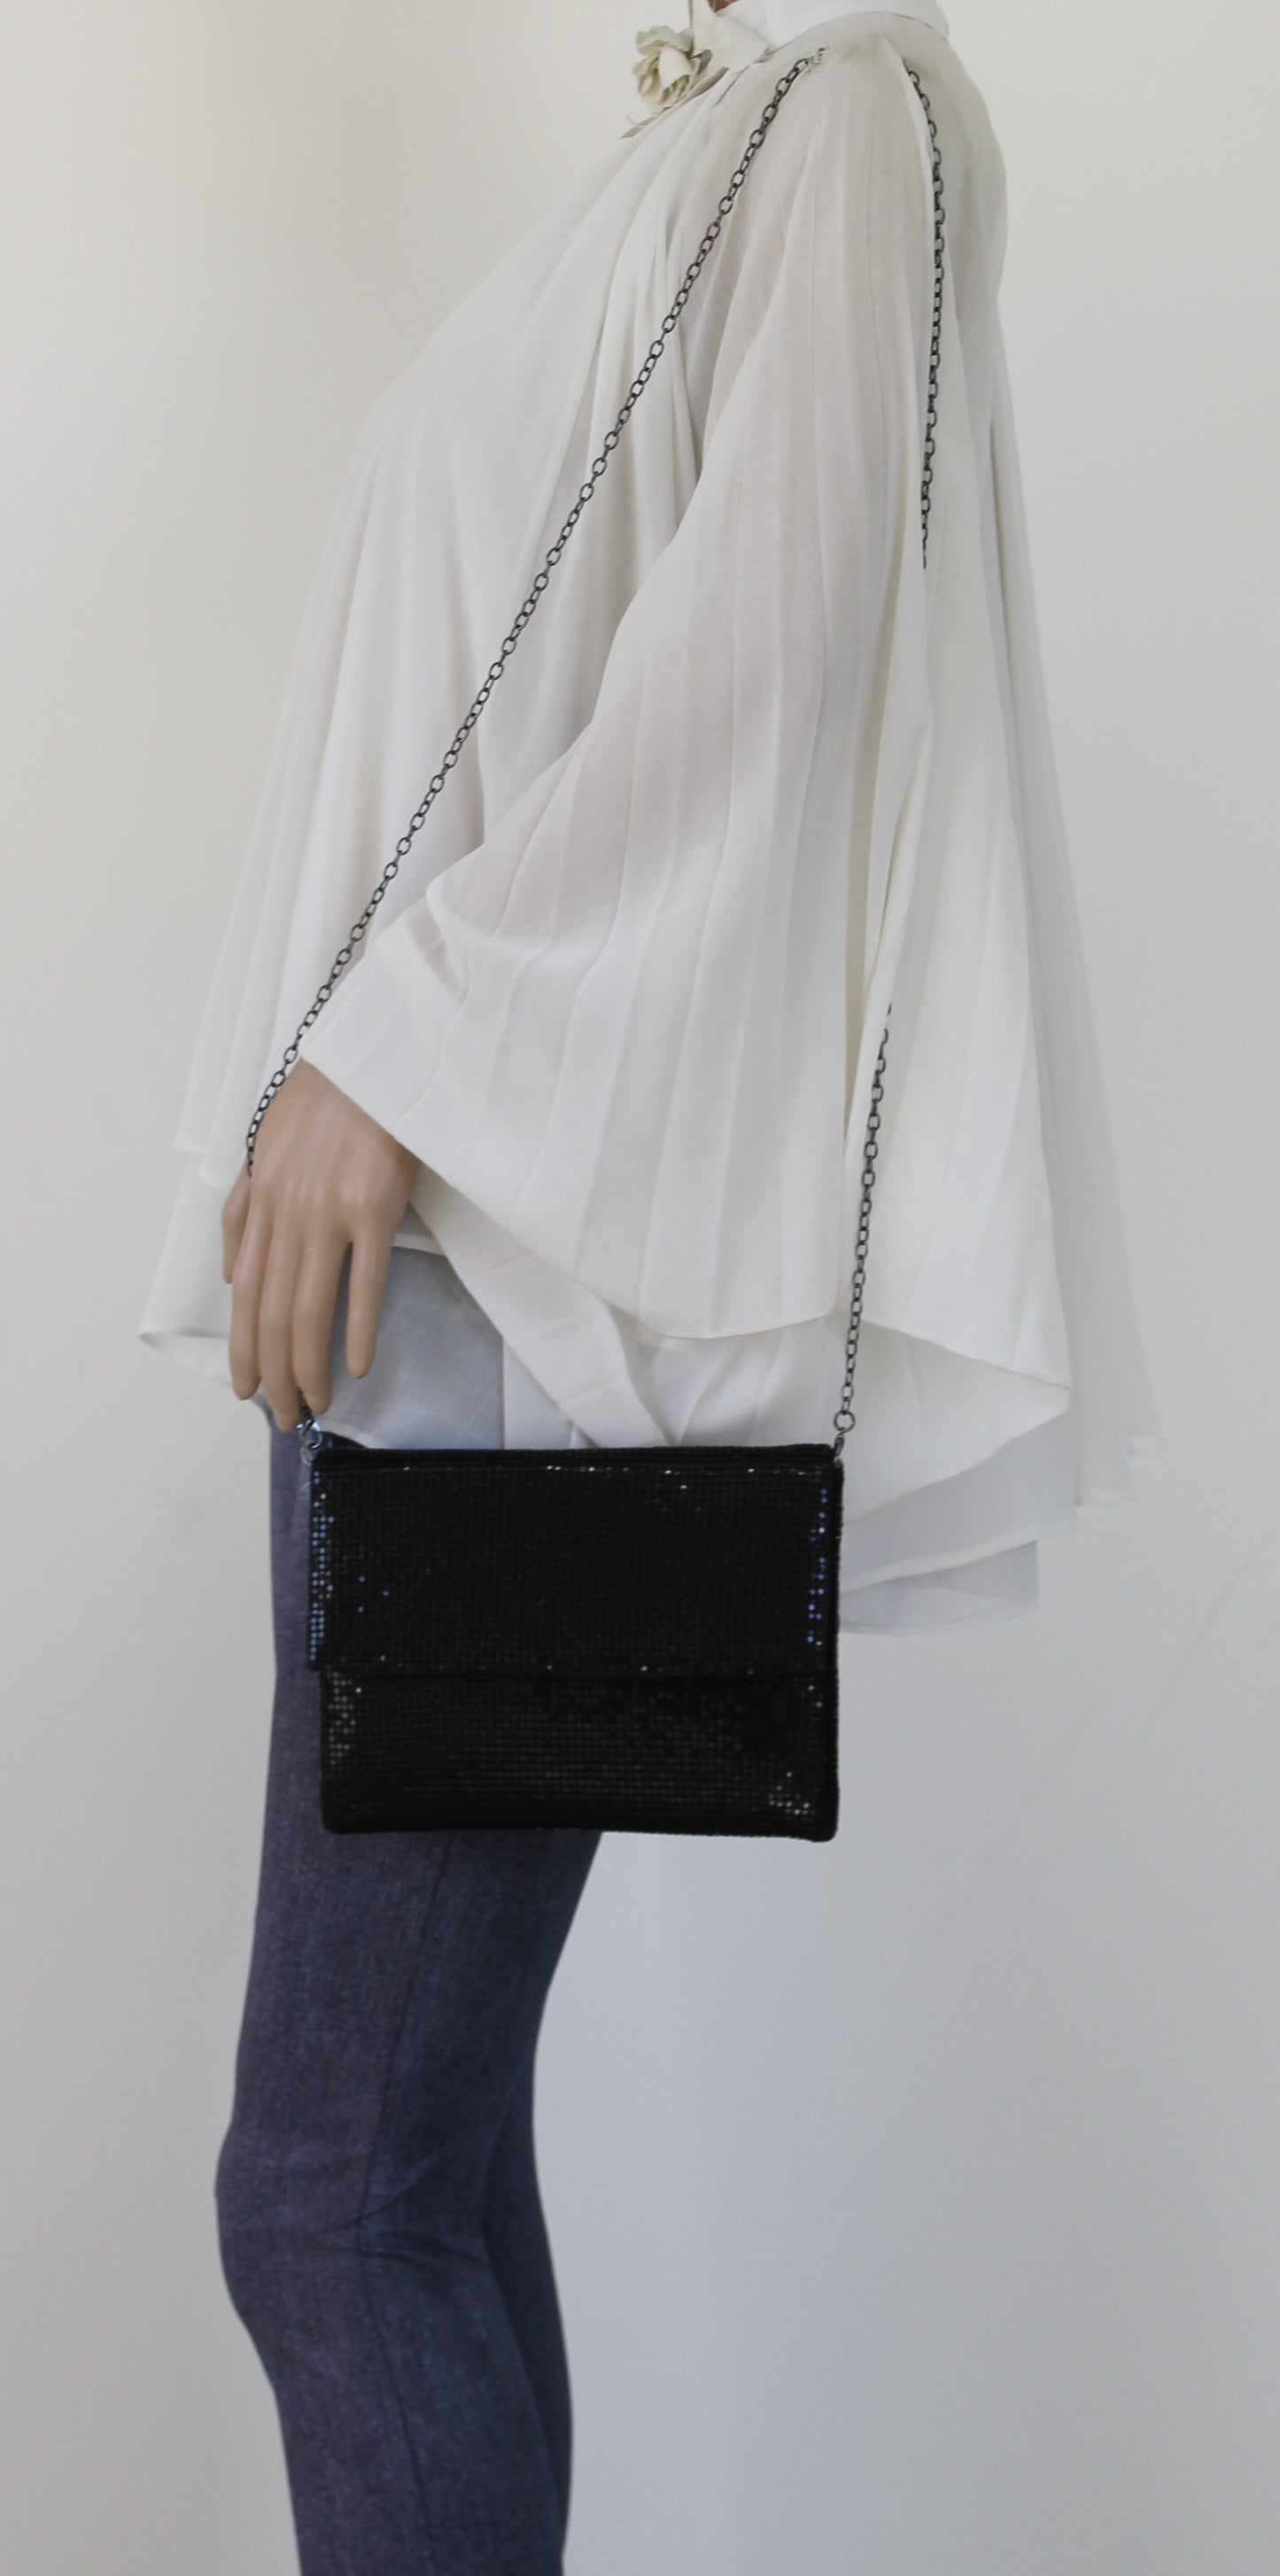 Daniella Sequin Flapover Clutch Bag Black